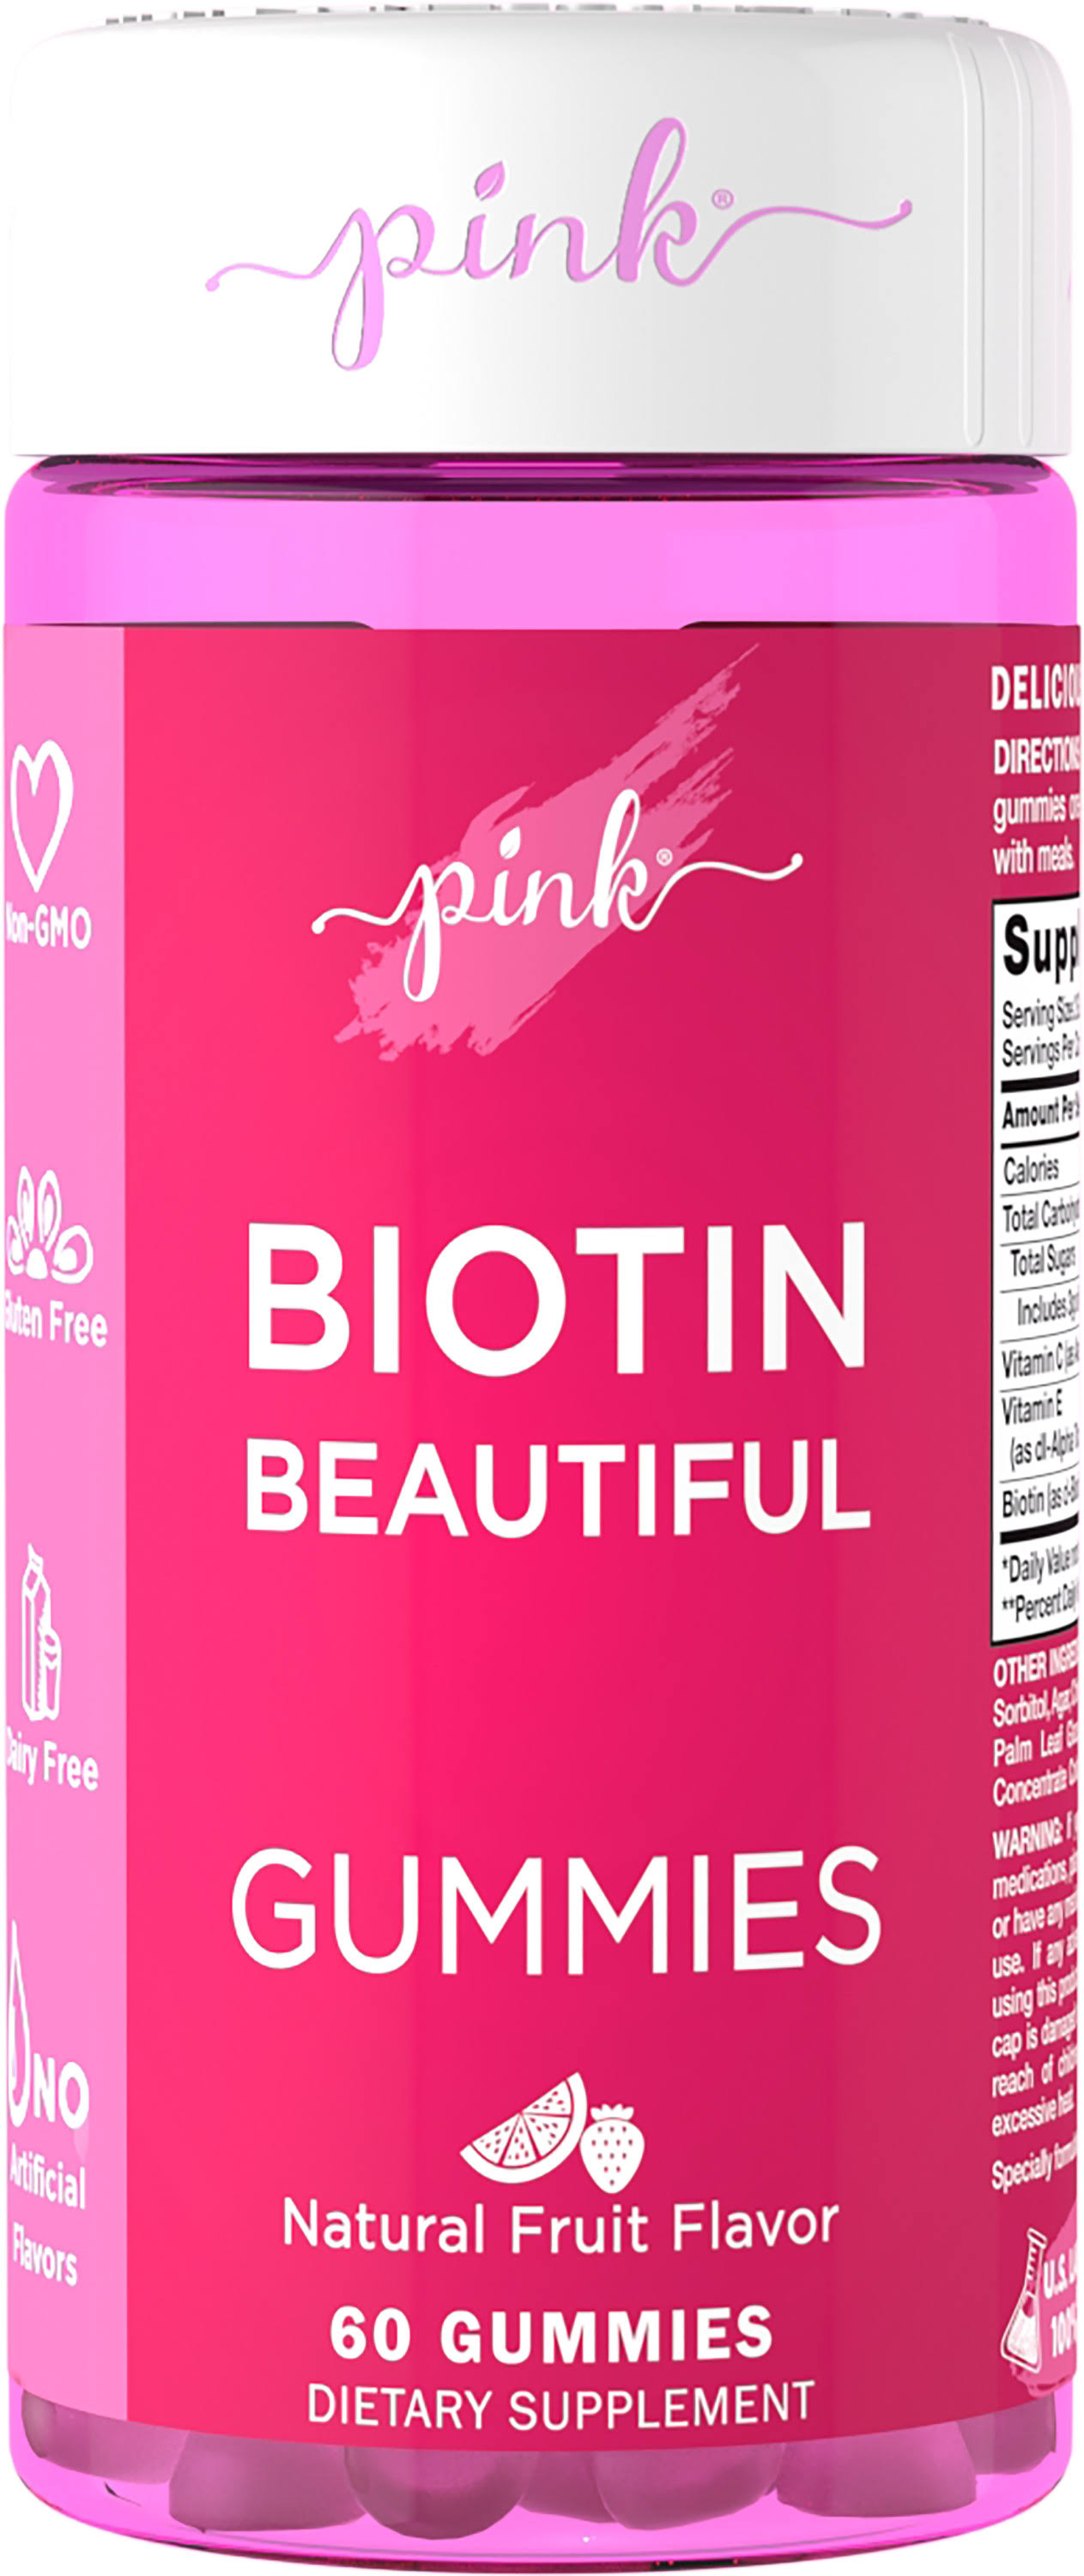 Pink Biotin Beautiful, Gummies, Natural Fruit Flavor - 60 gummies